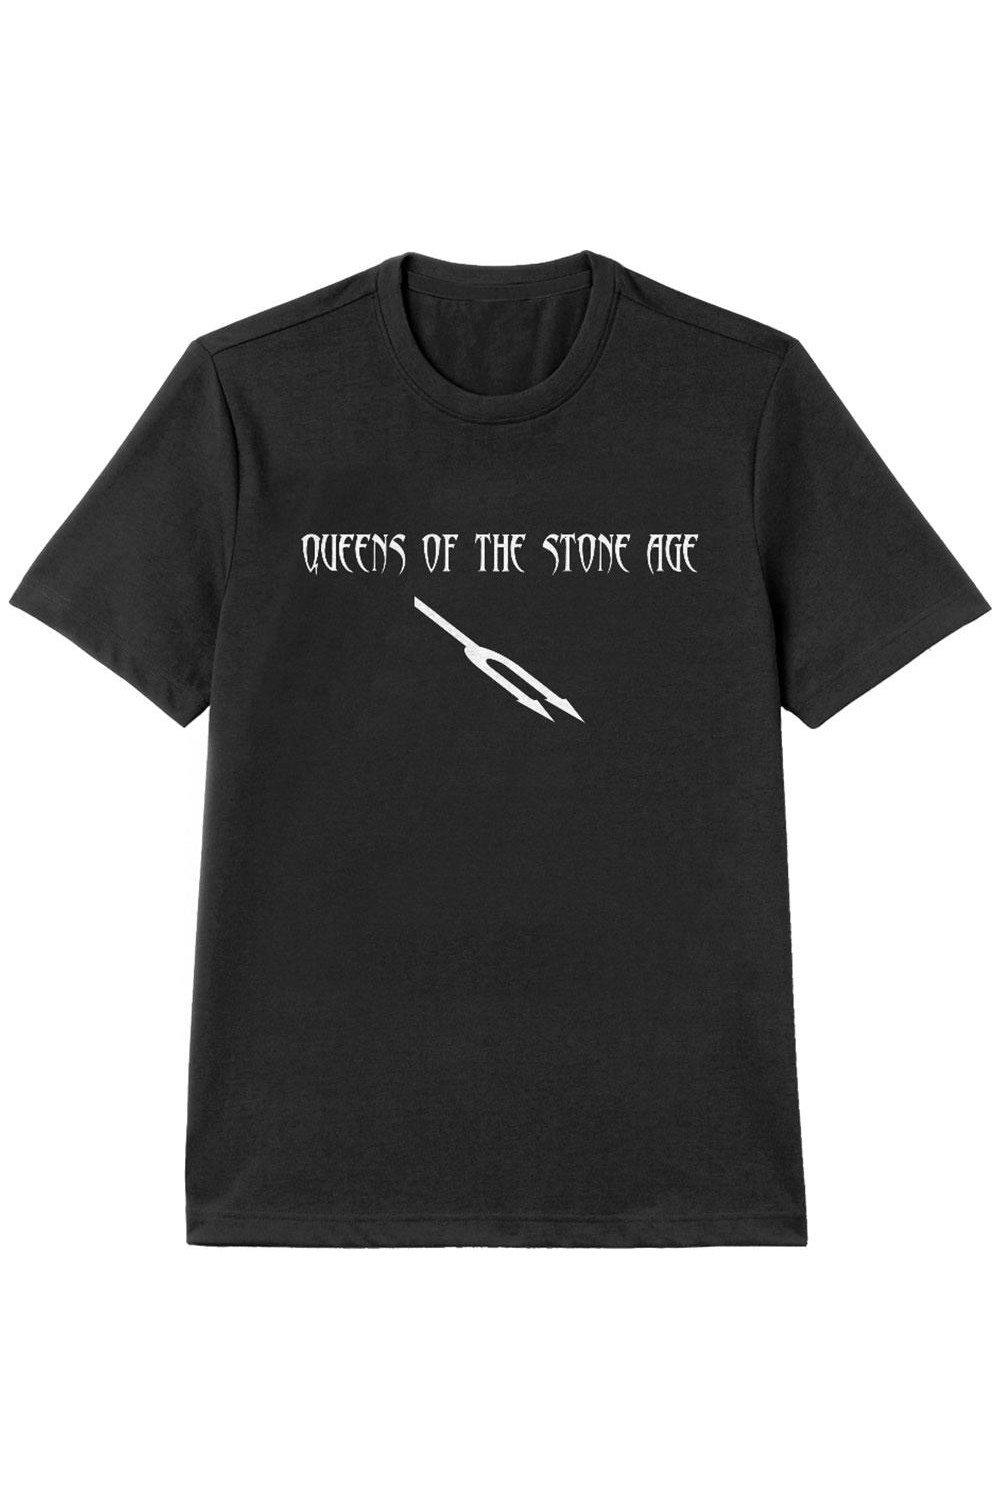 Хлопковая футболка Deaf Songs Queens Of The Stone Age, черный футболка design heroes queens of the stone age женская черная s